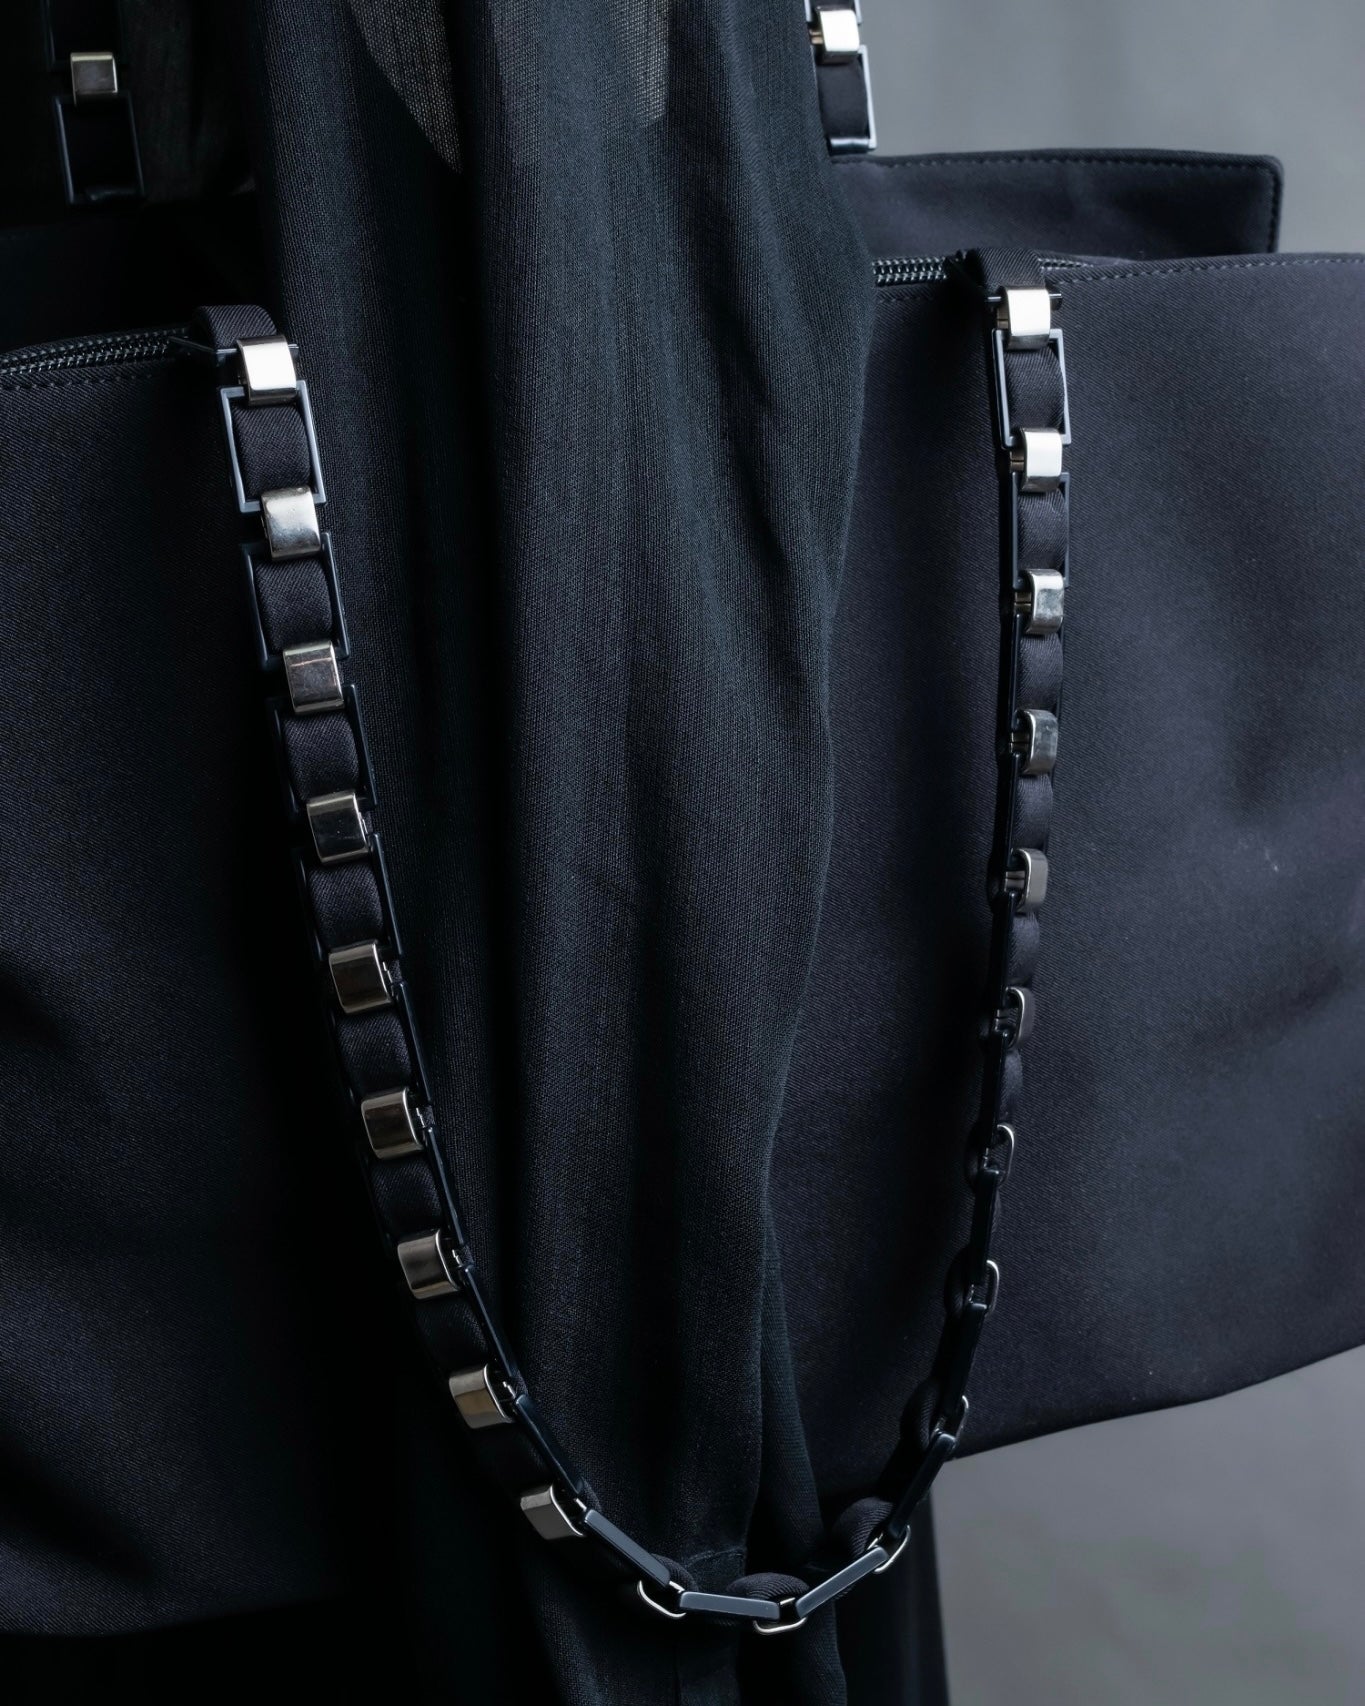 "Salvatore Ferragamo" iron chain shoulder bag